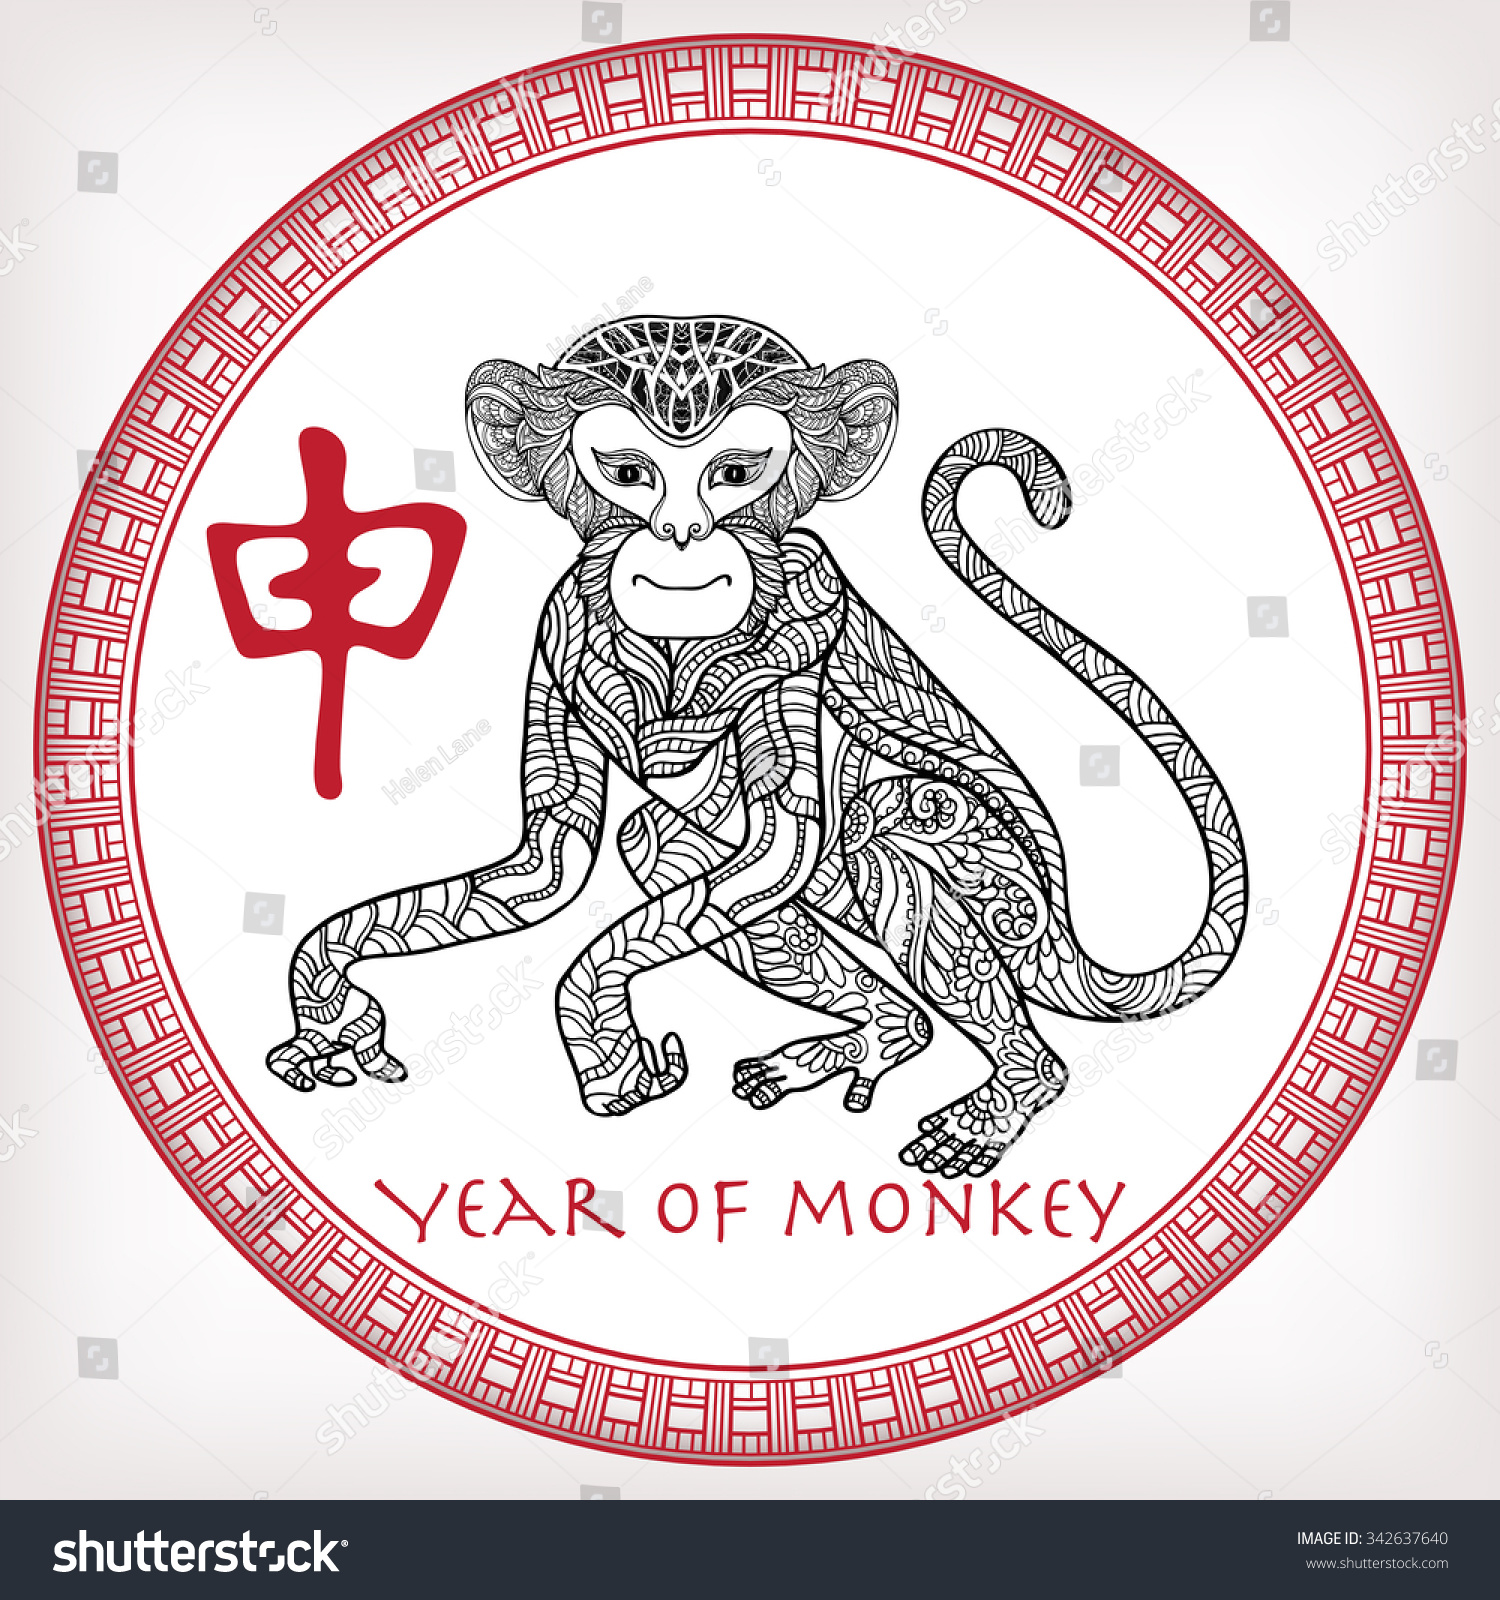 Гороскоп весов обезьяны. Китайский гороскоп обезьяна. Год обезьяны 1980. Китайский знак зодиака обезьяна. Китайский гороскоп обезьяна талисман.